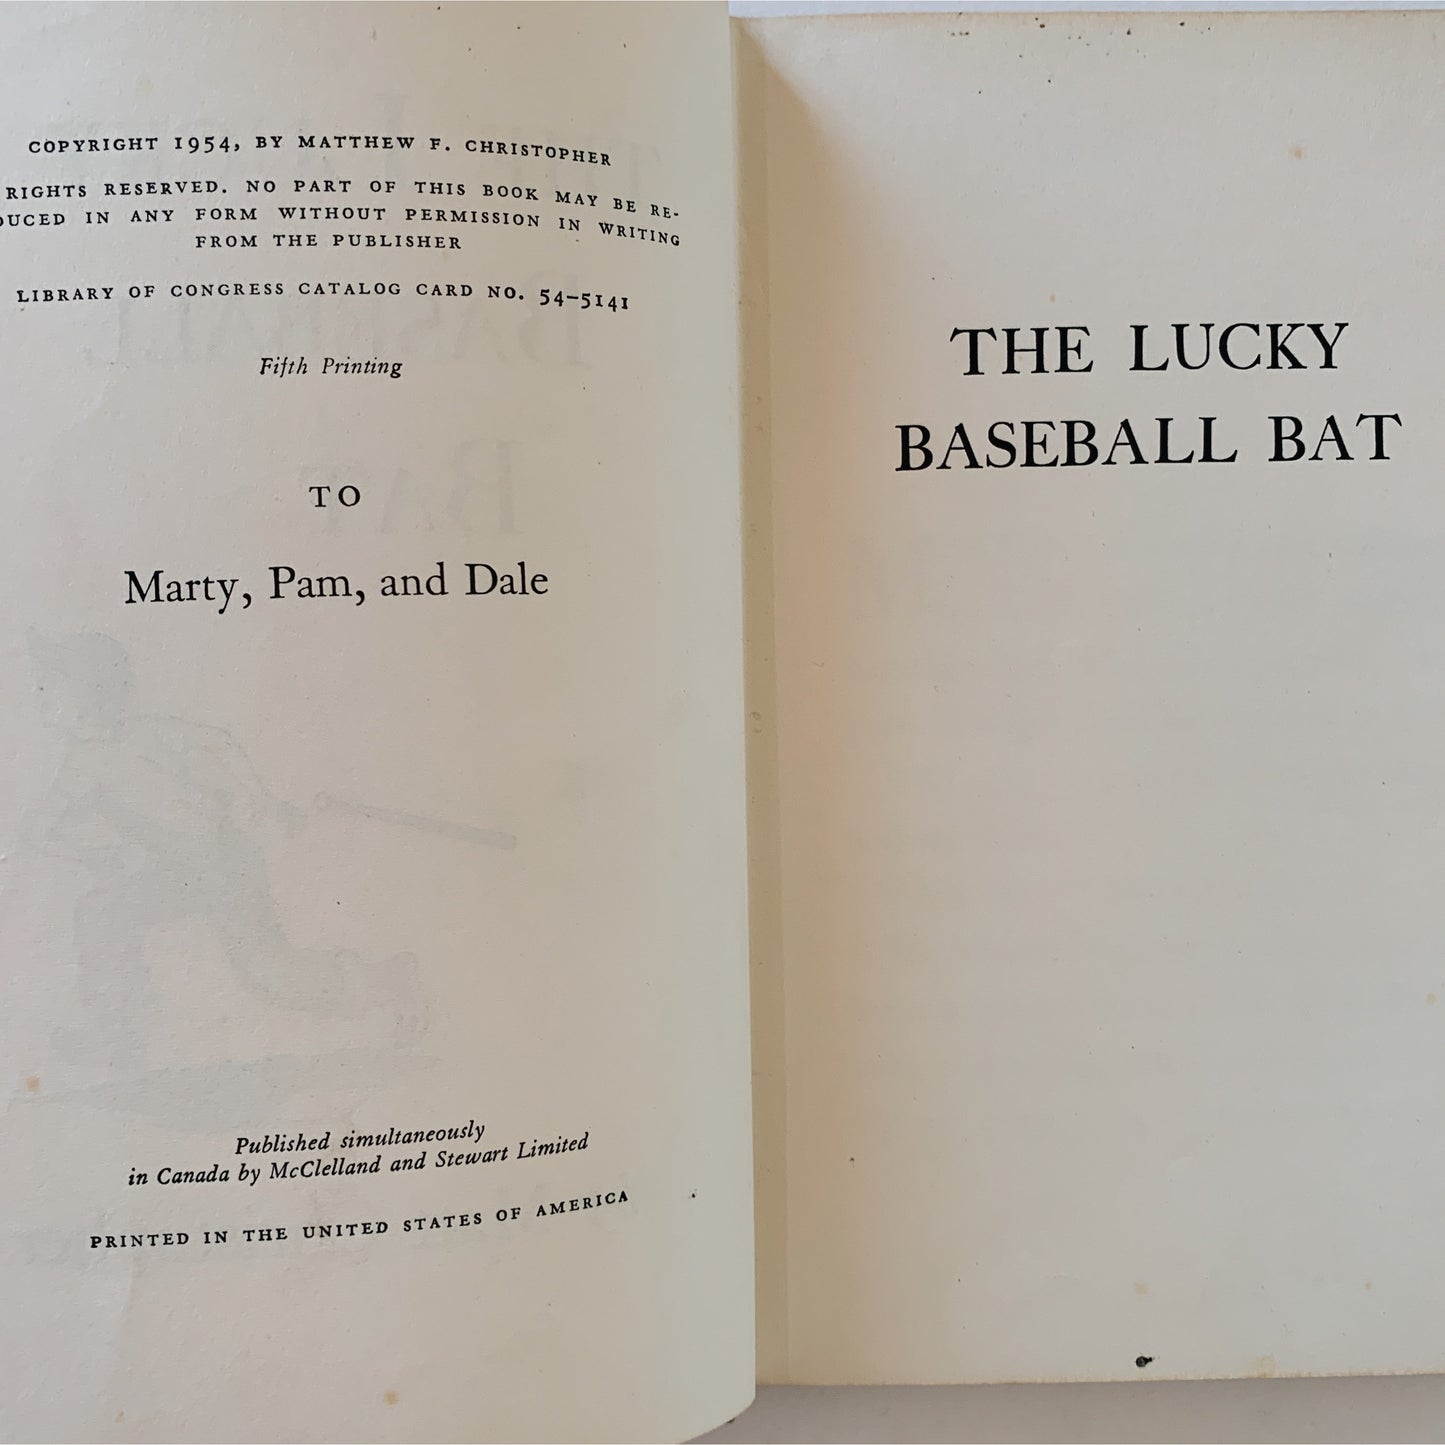 The Lucky Baseball Bat, Matt Christopher, 1954, Hardcover